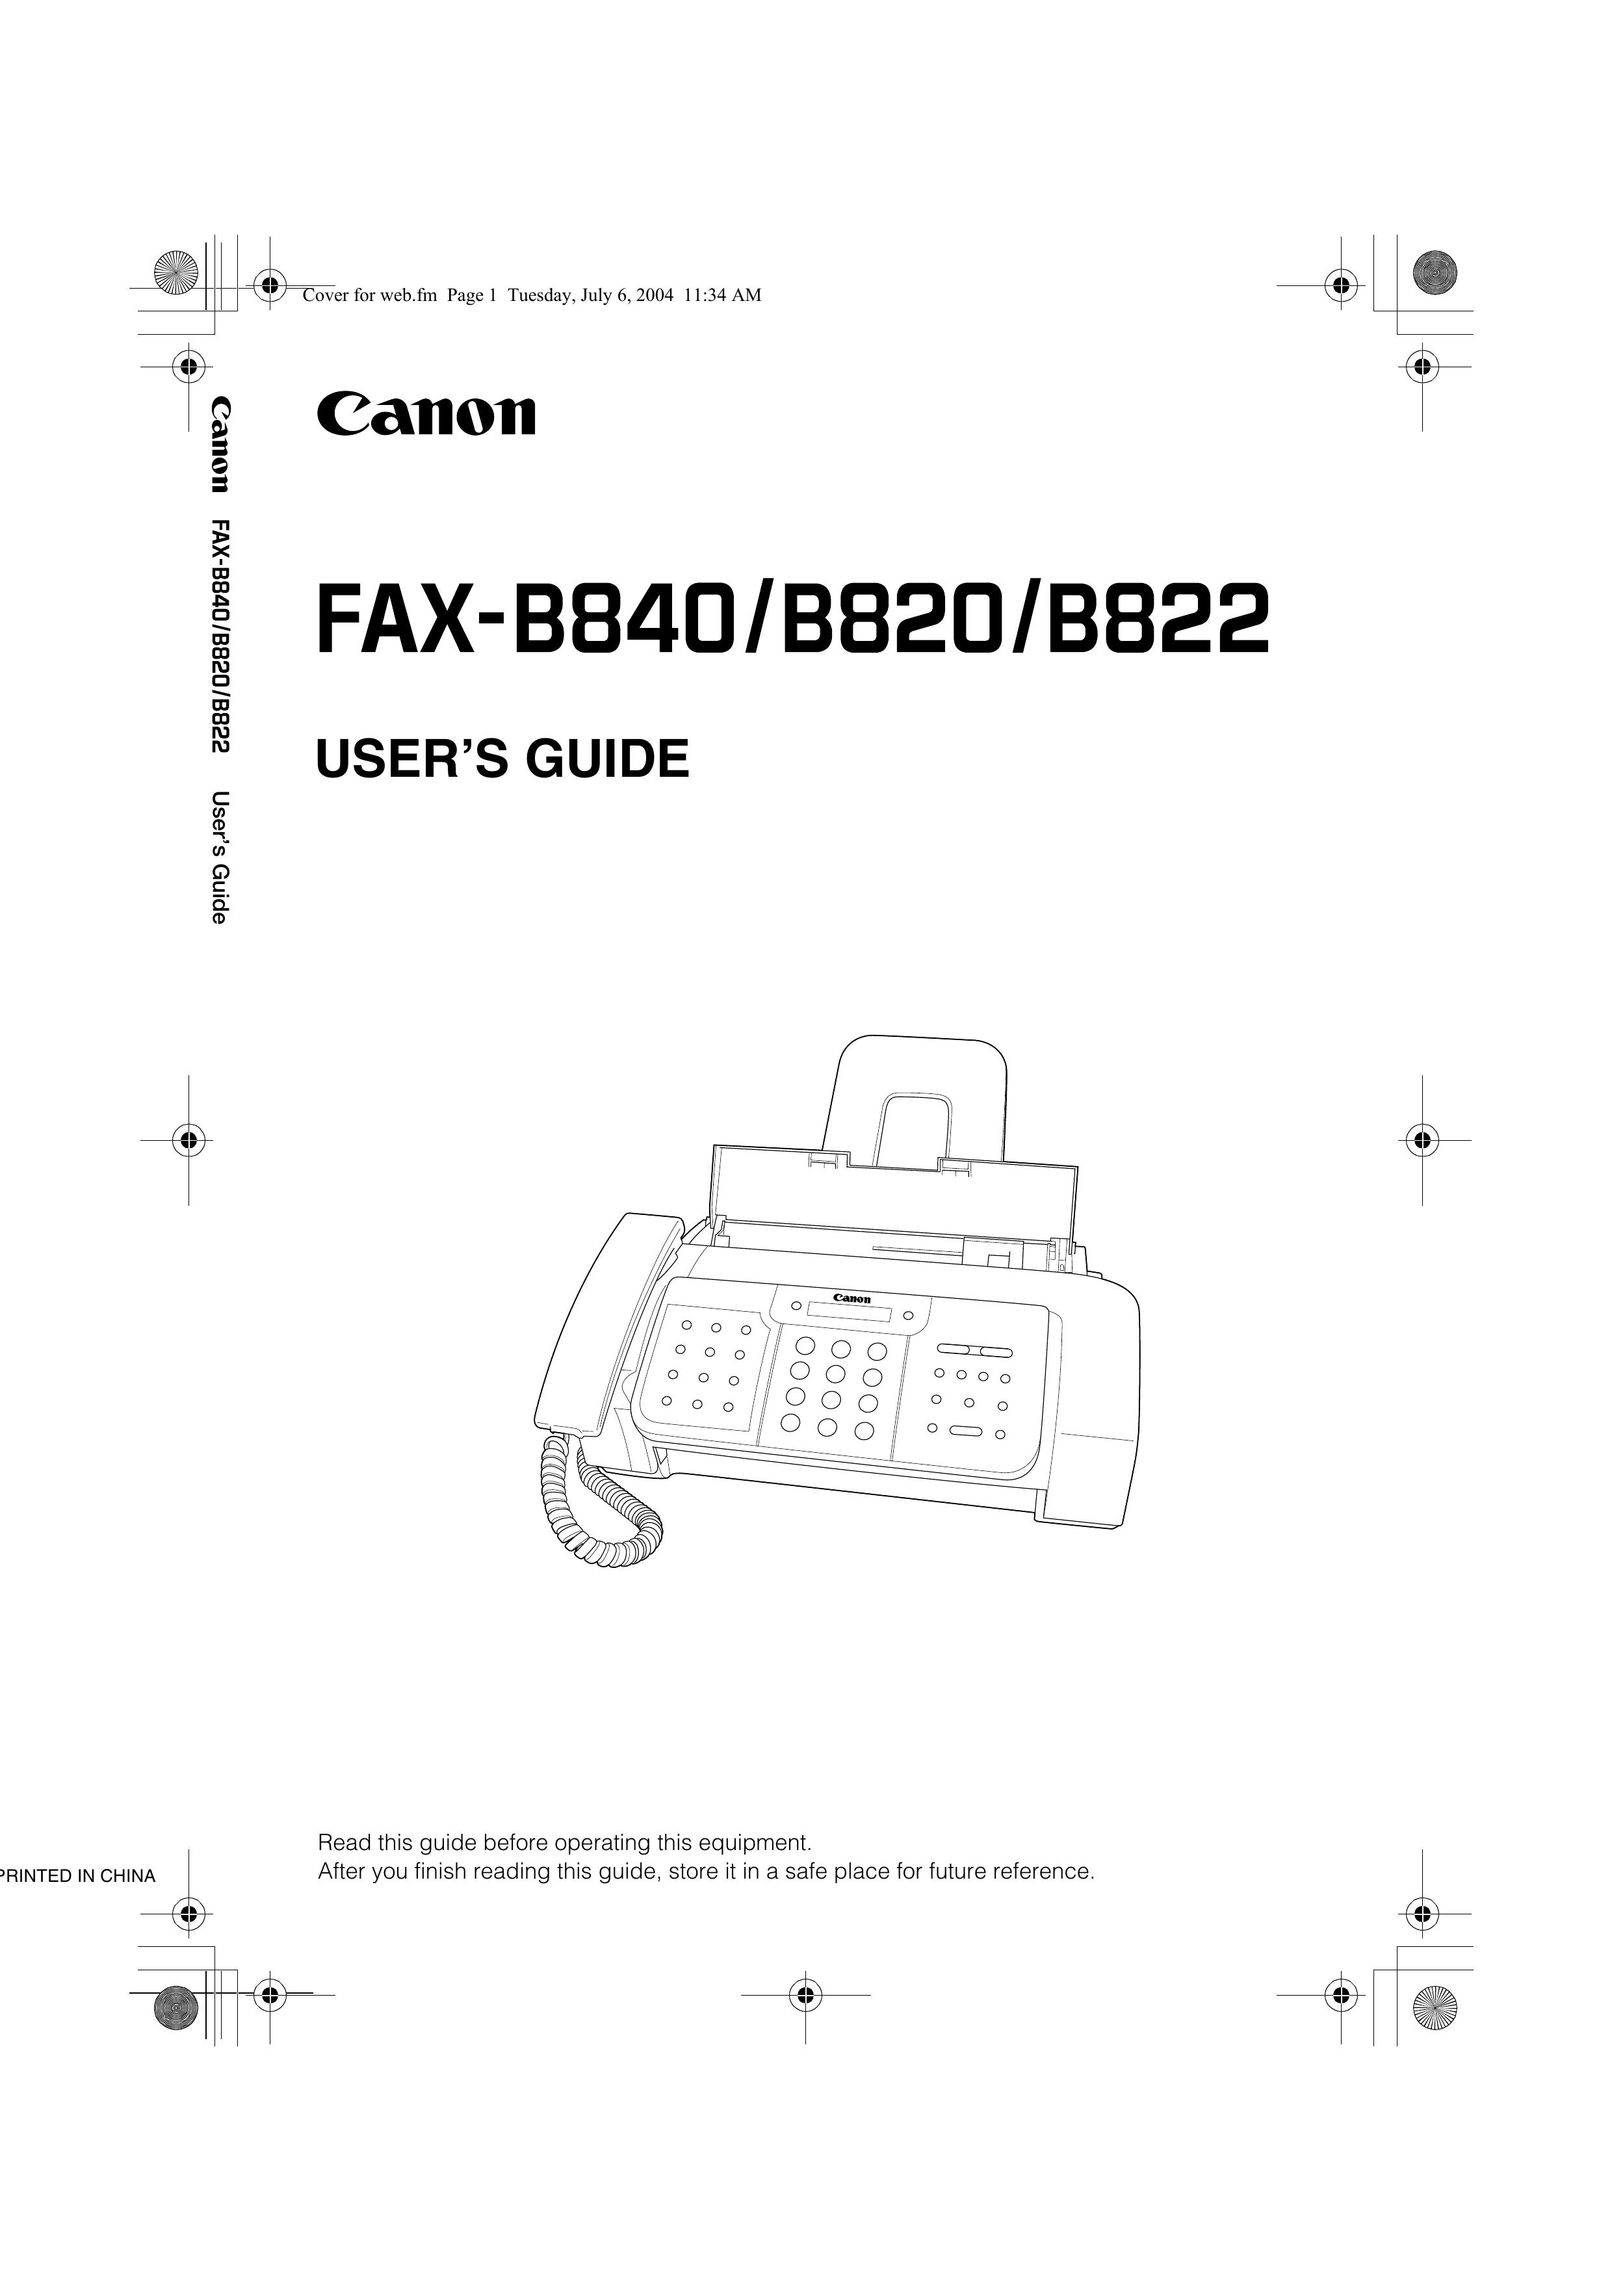 Canon B822 Fax Machine User Manual